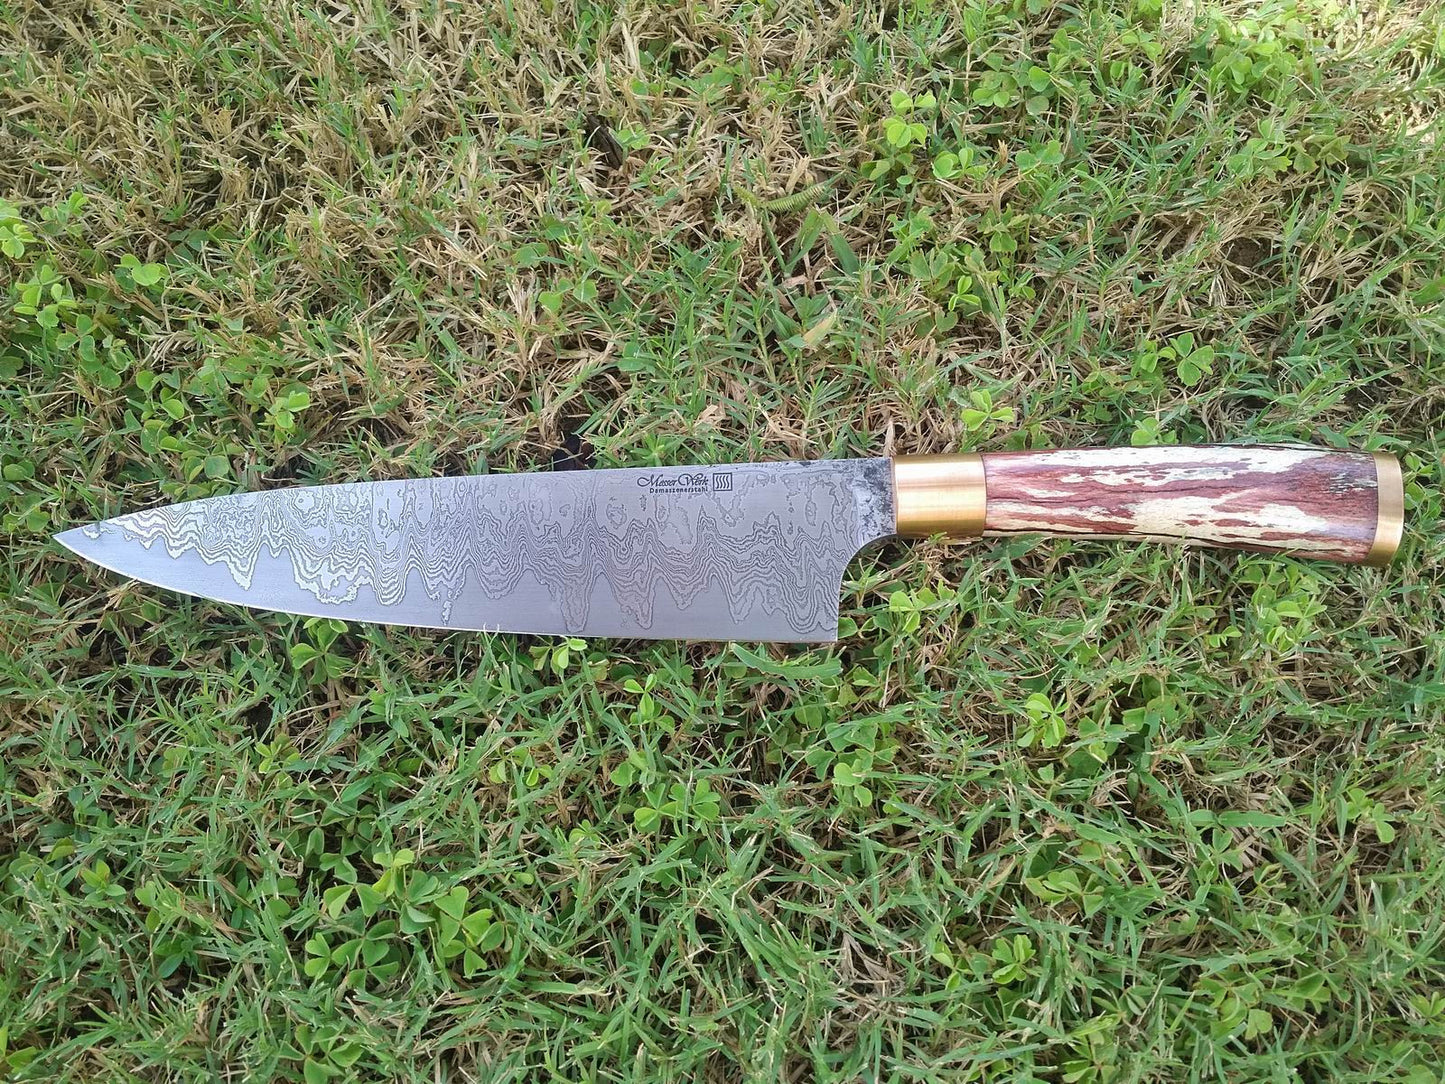 Custom Chef's Knife with San Mai Damascus Steel Blade